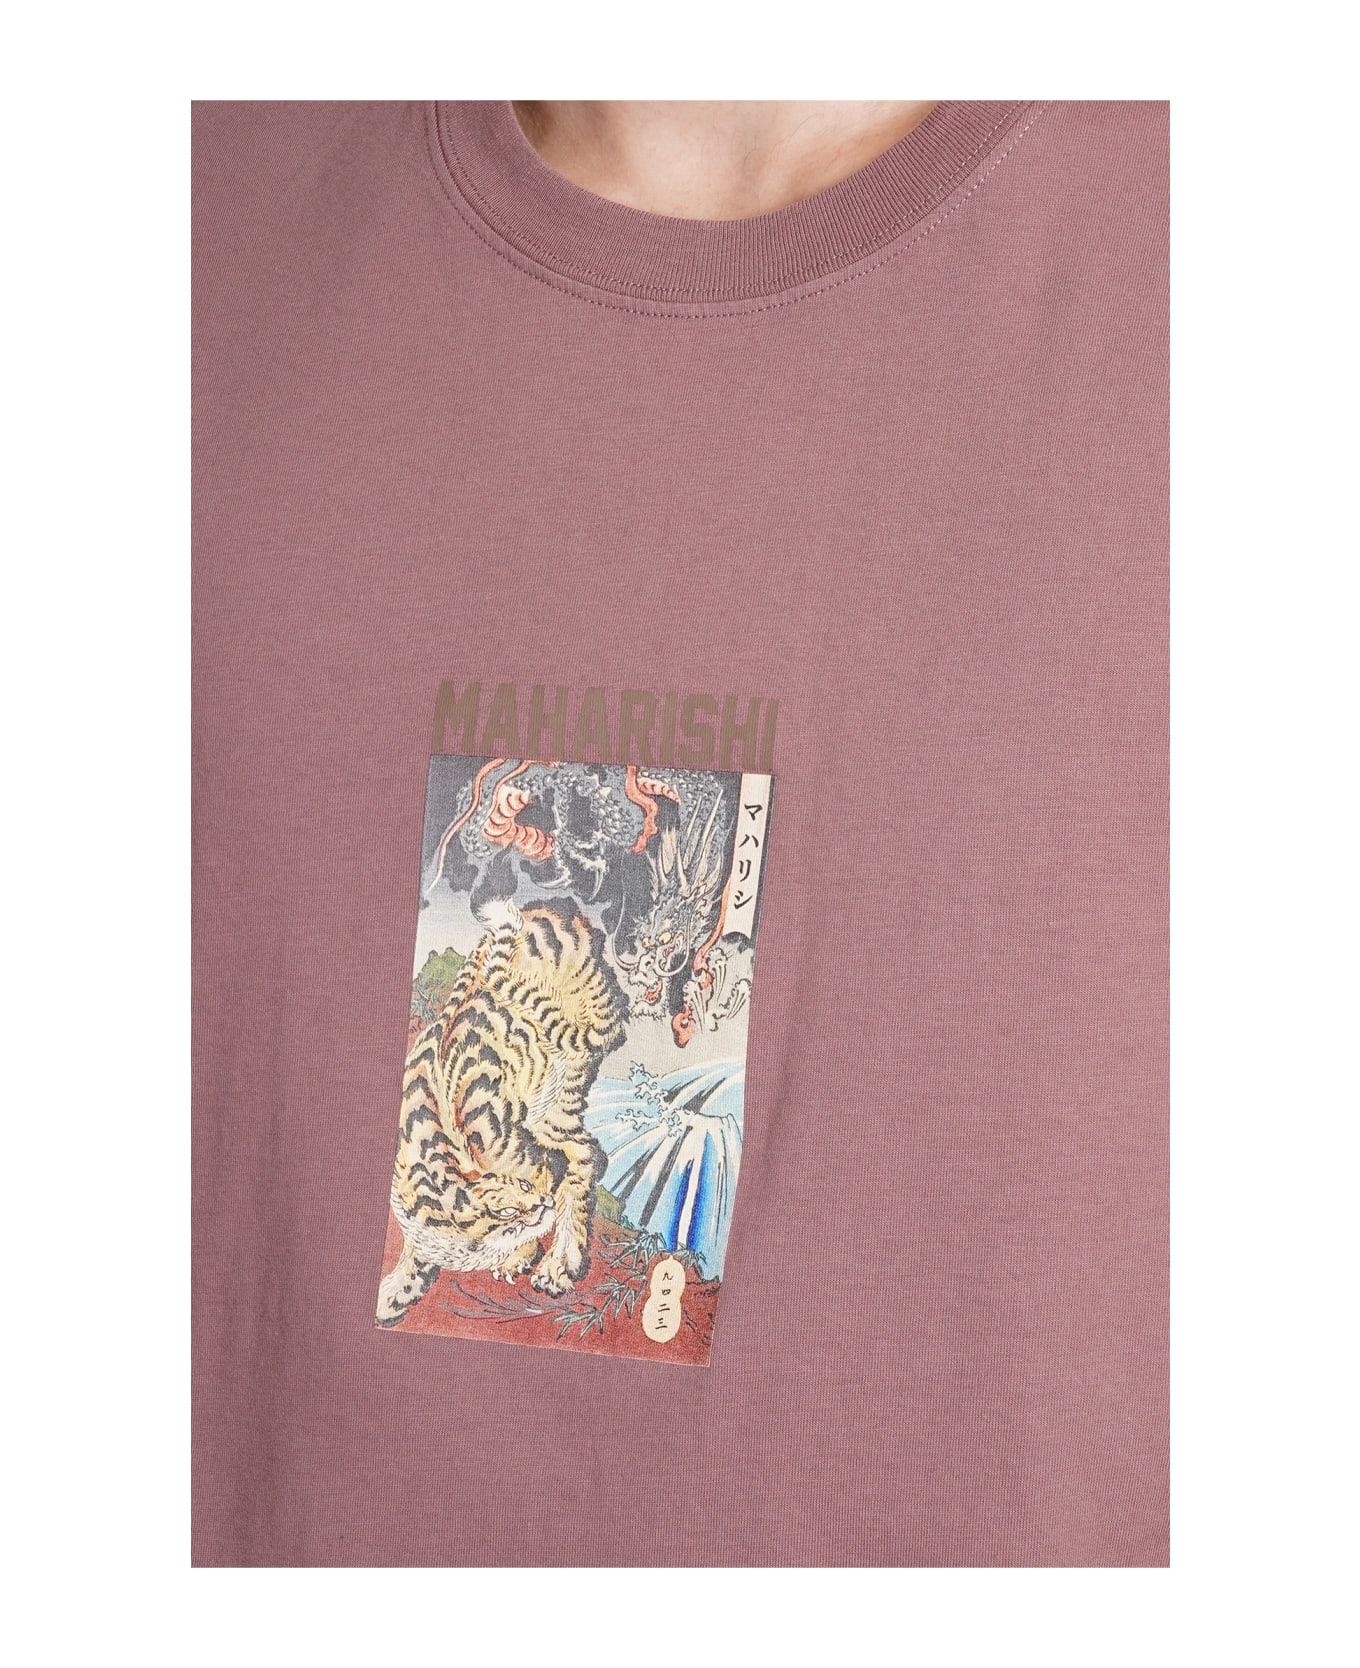 Maharishi T-shirt In Viola Cotton - Viola シャツ